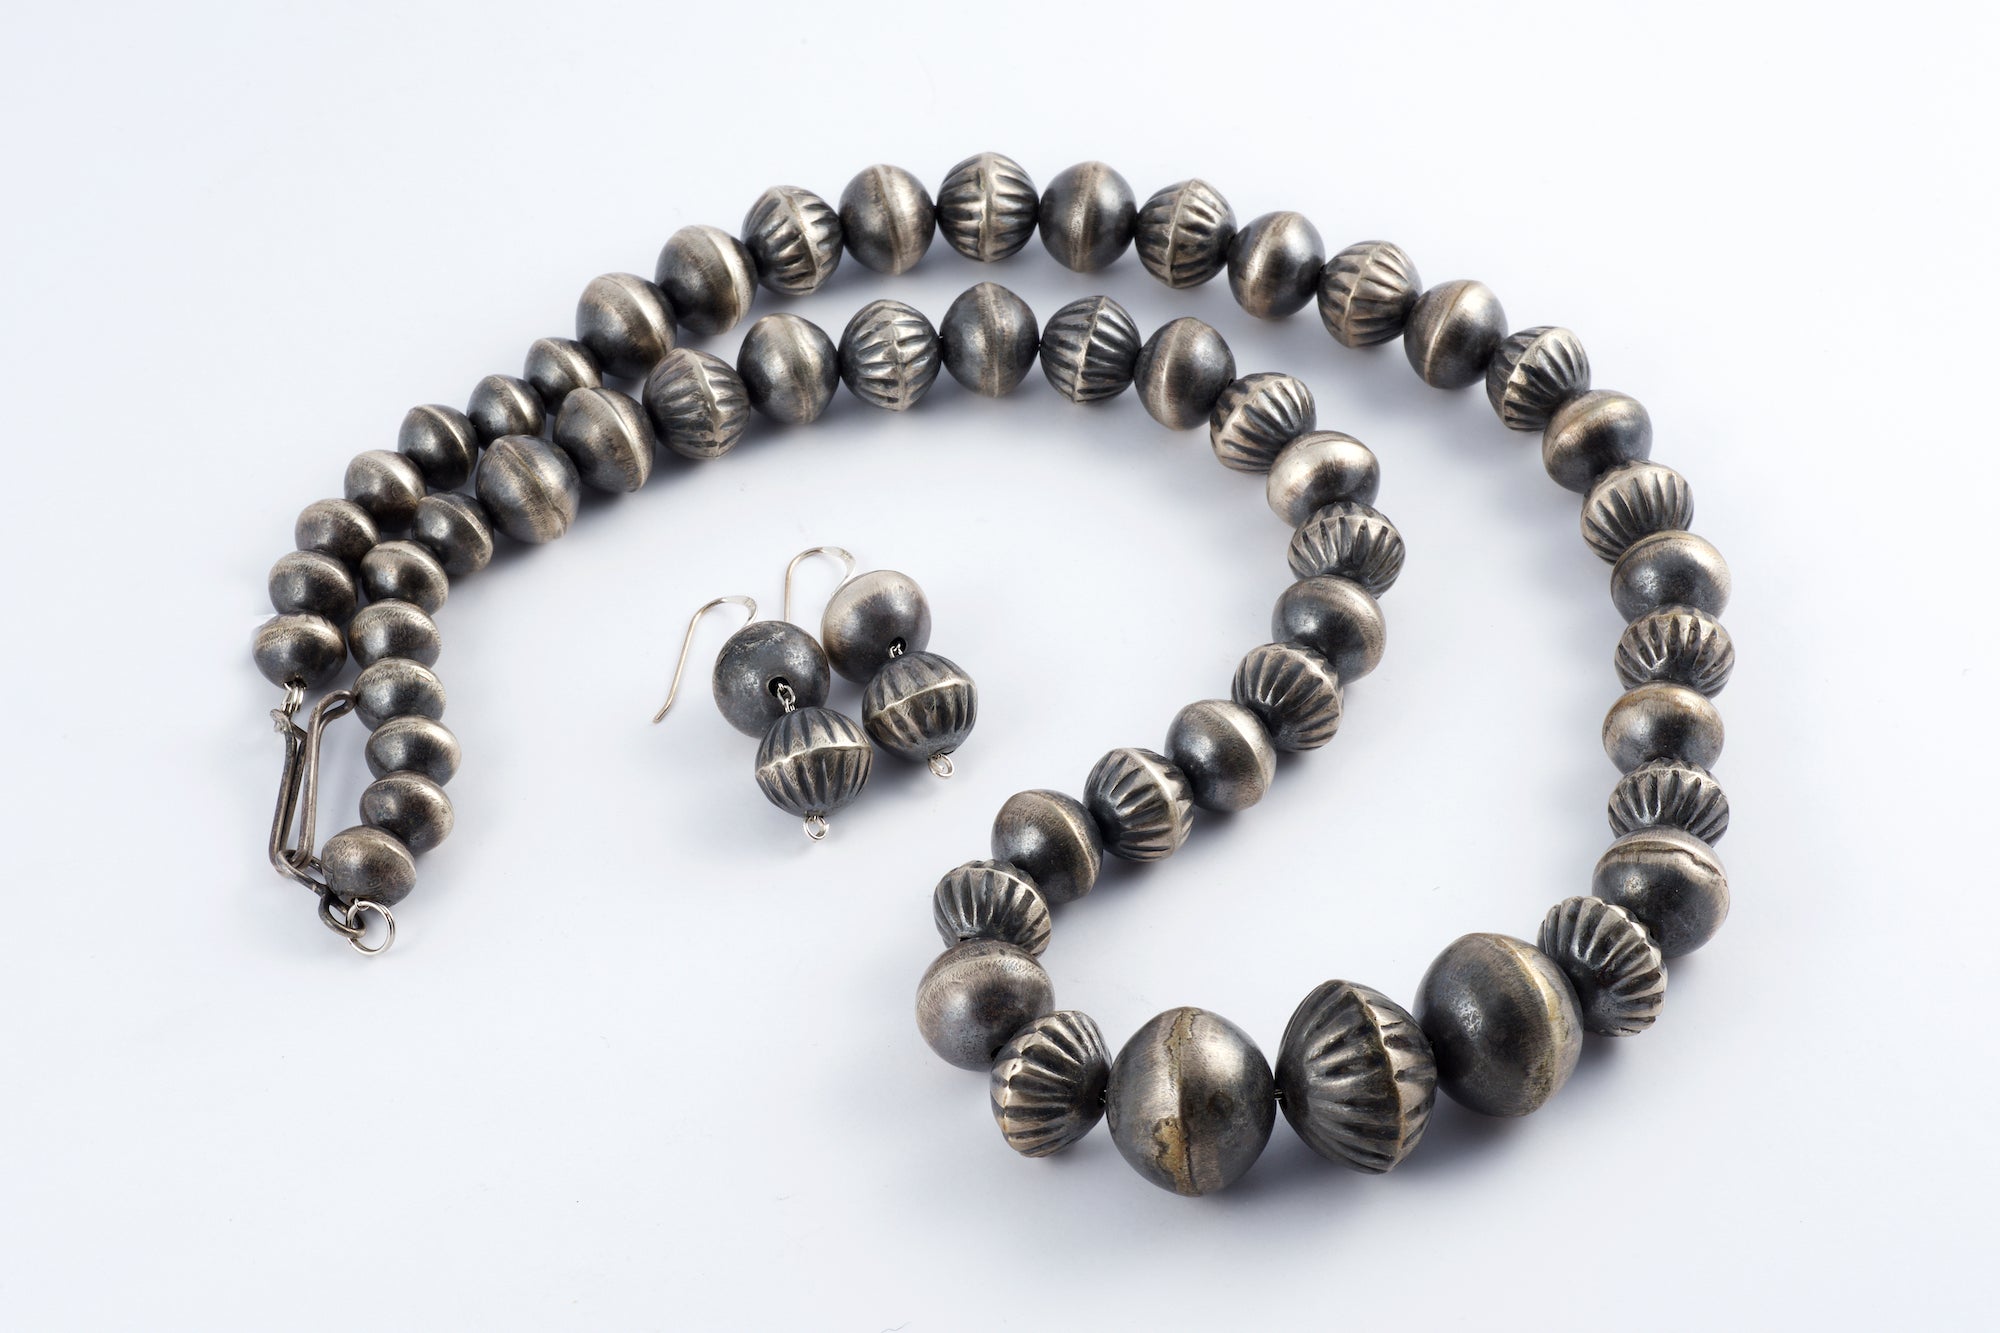 Handmade Bead Necklace and Earring Set By Virginia Tso